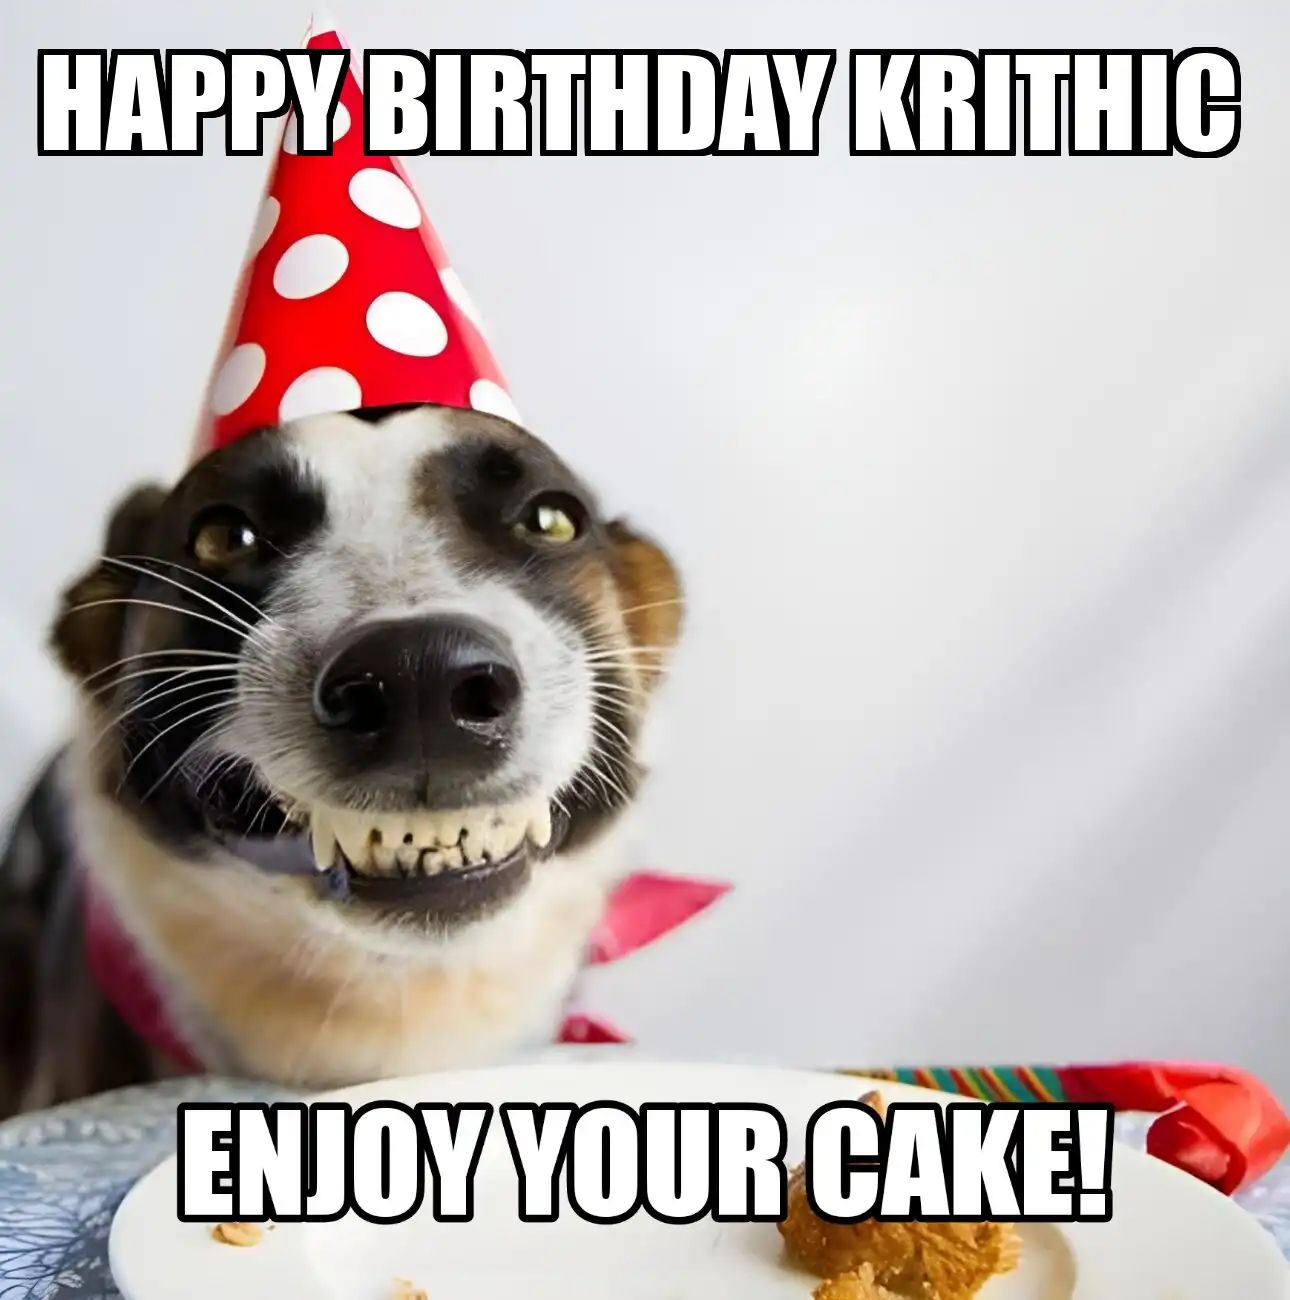 Happy Birthday Krithic Enjoy Your Cake Dog Meme